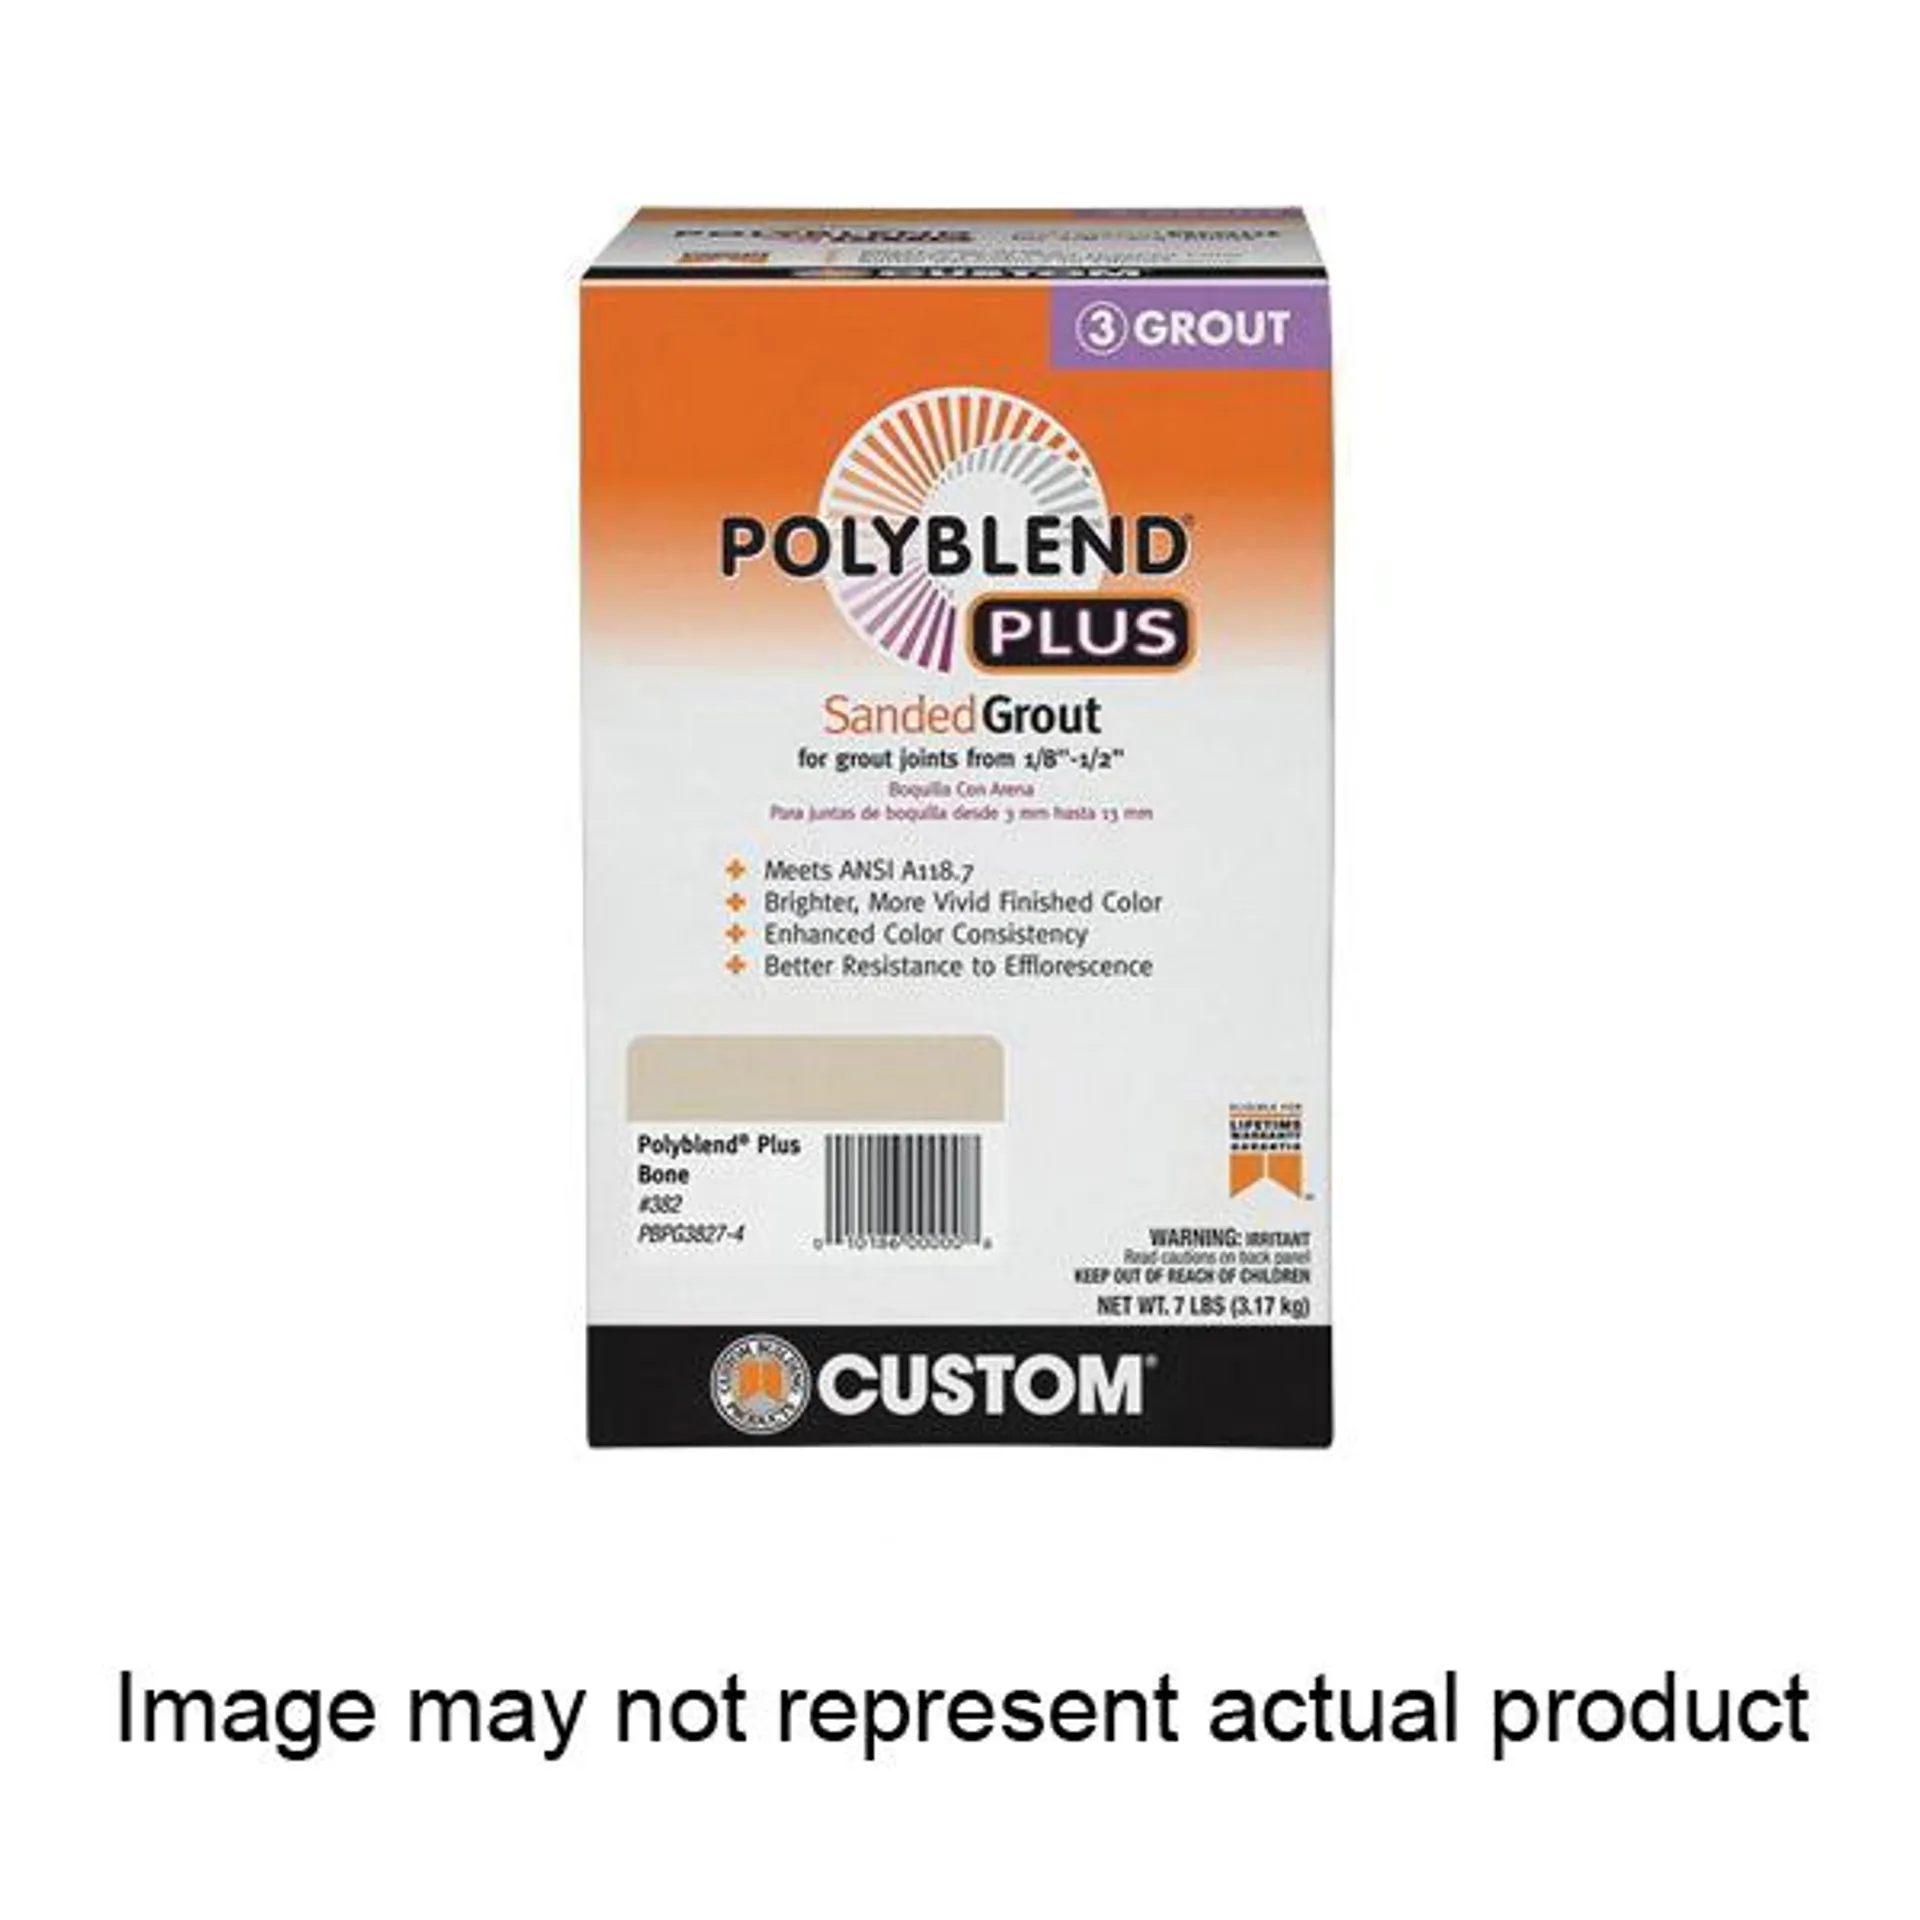 Custom Polyblend Plus PBPG6467-4 Sanded Grout, Coffee Bean, 7 lb Box